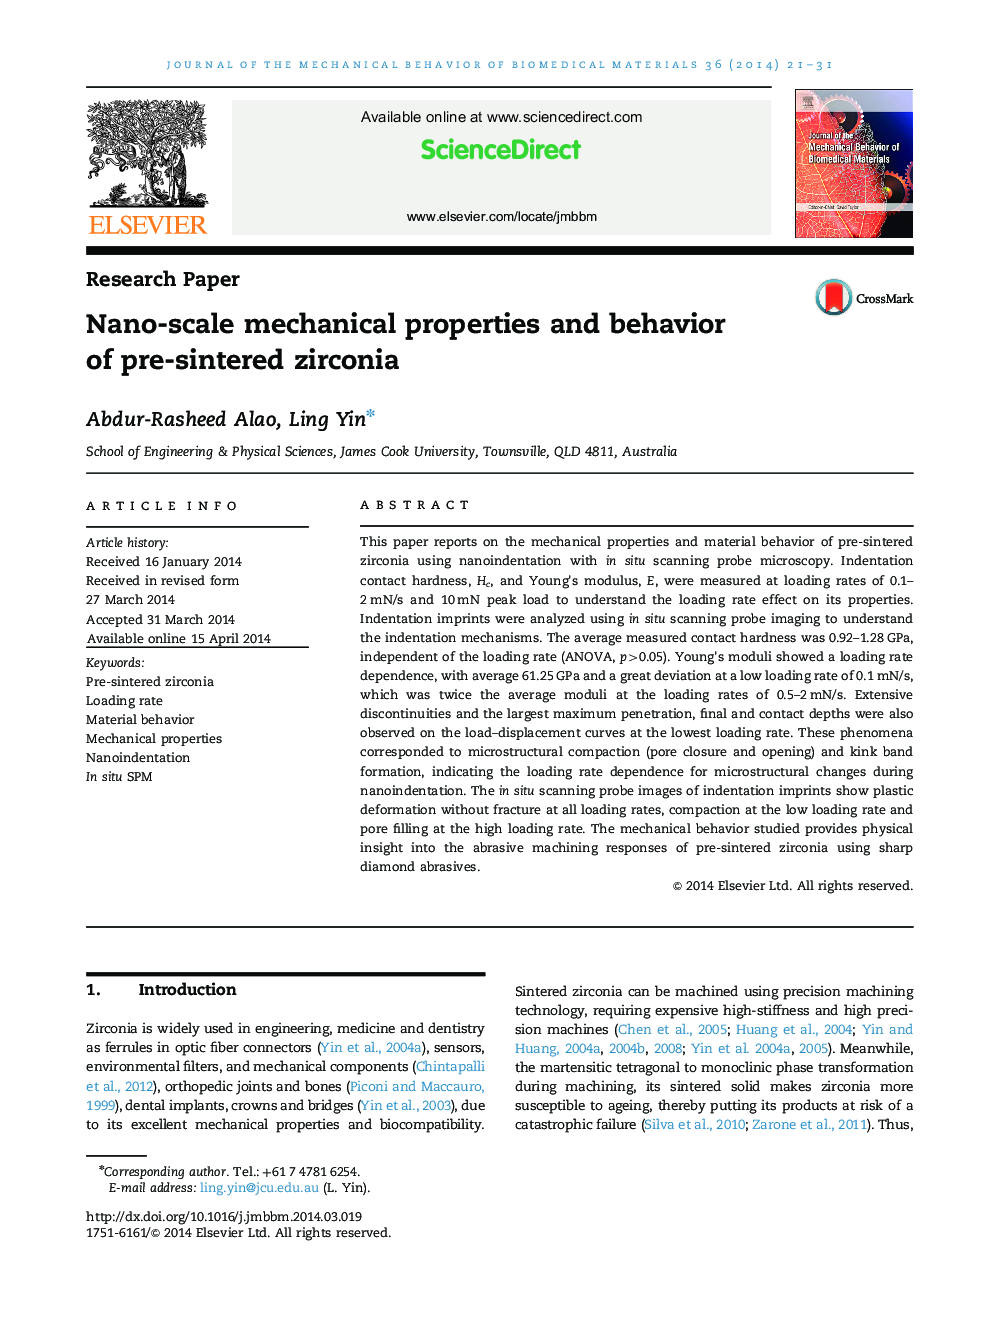 Nano-scale mechanical properties and behavior of pre-sintered zirconia